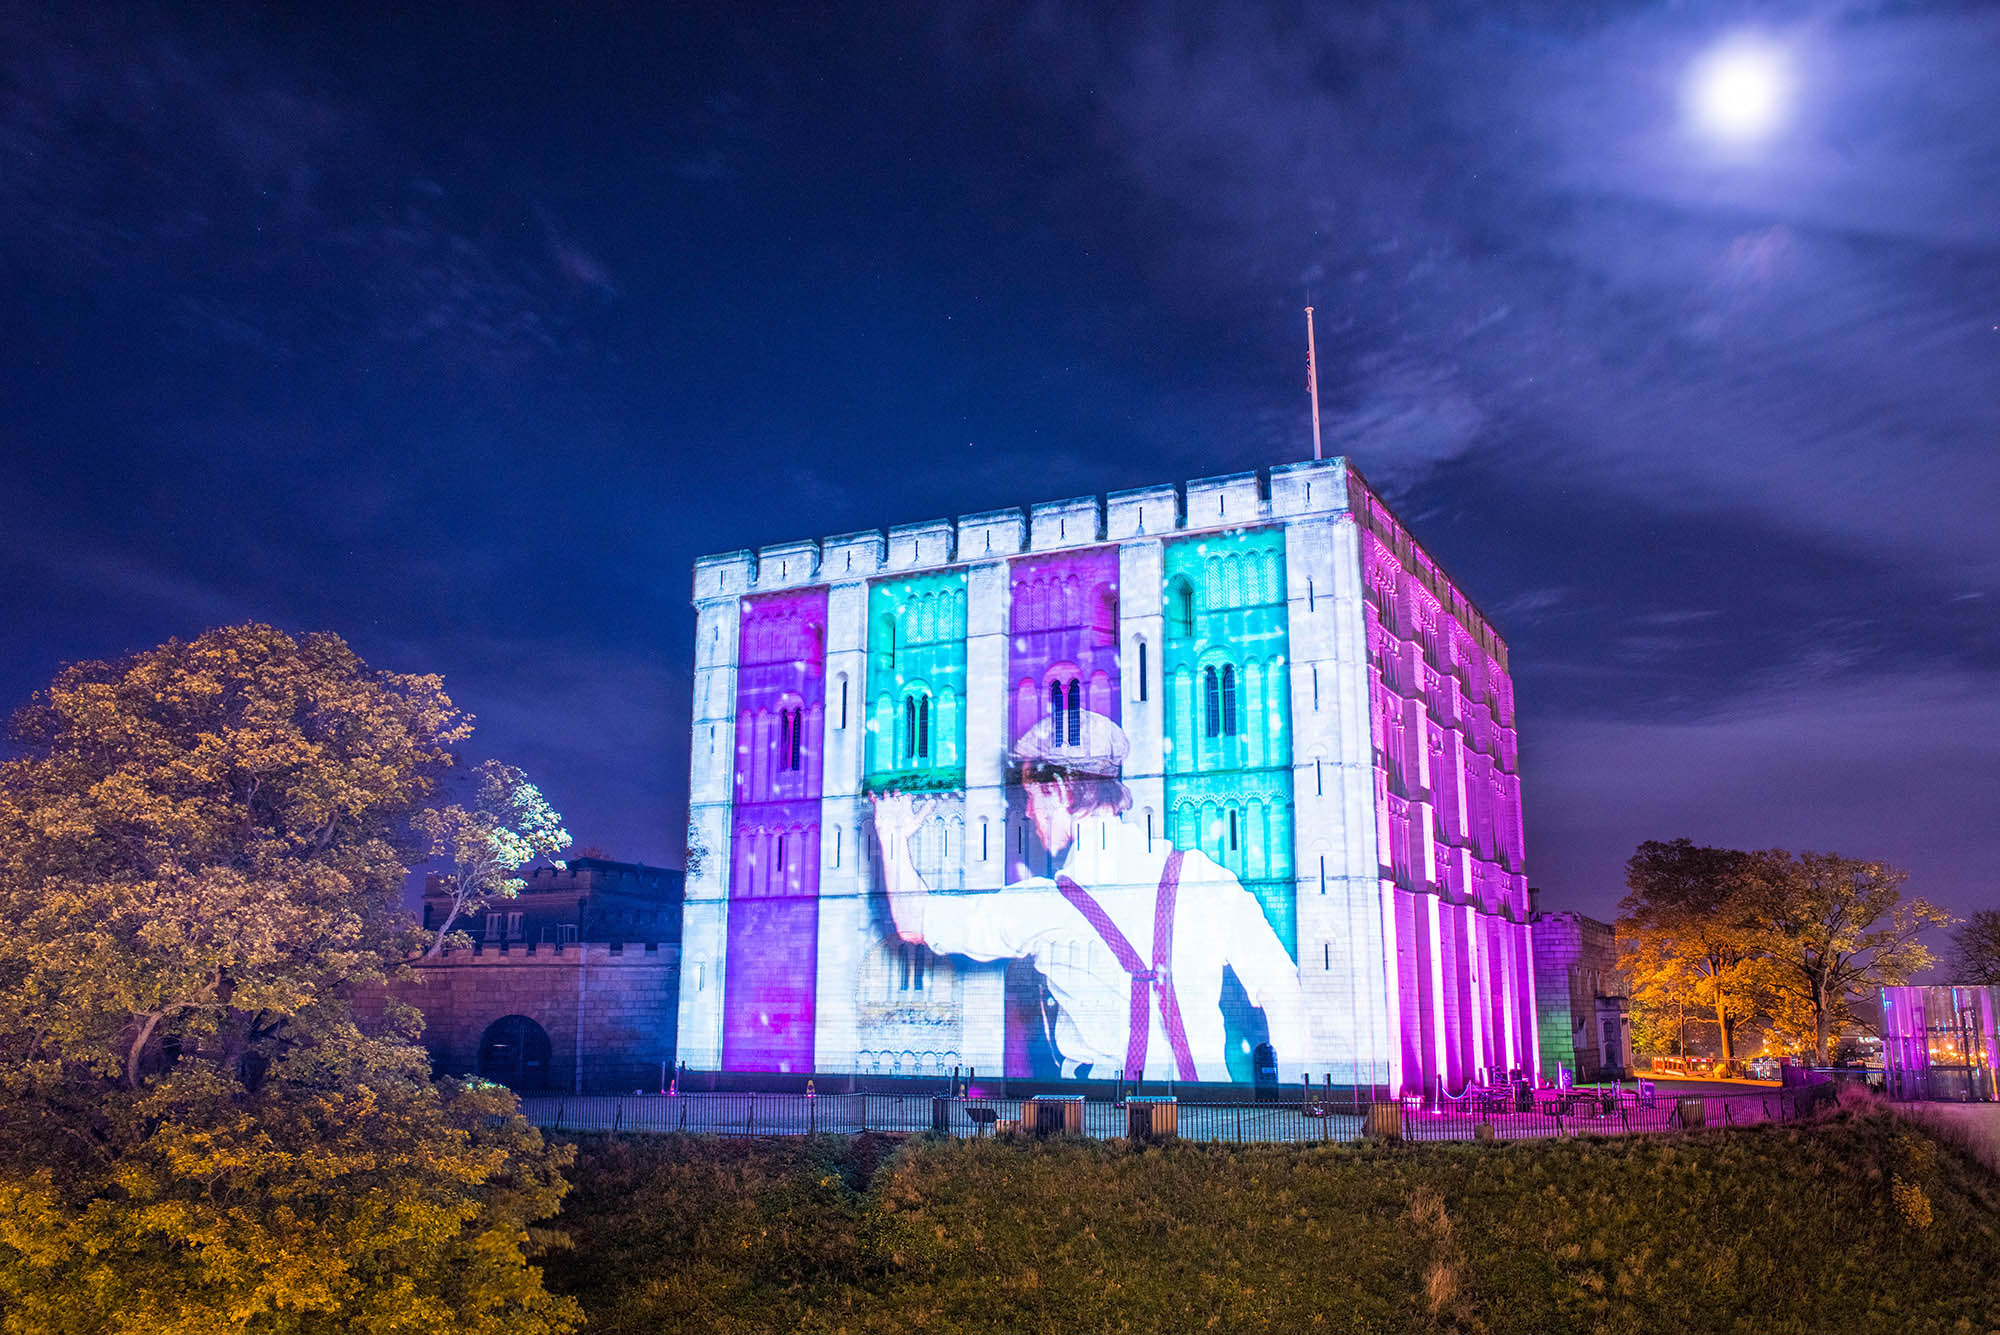 Norwich Castle Christmas Projection show